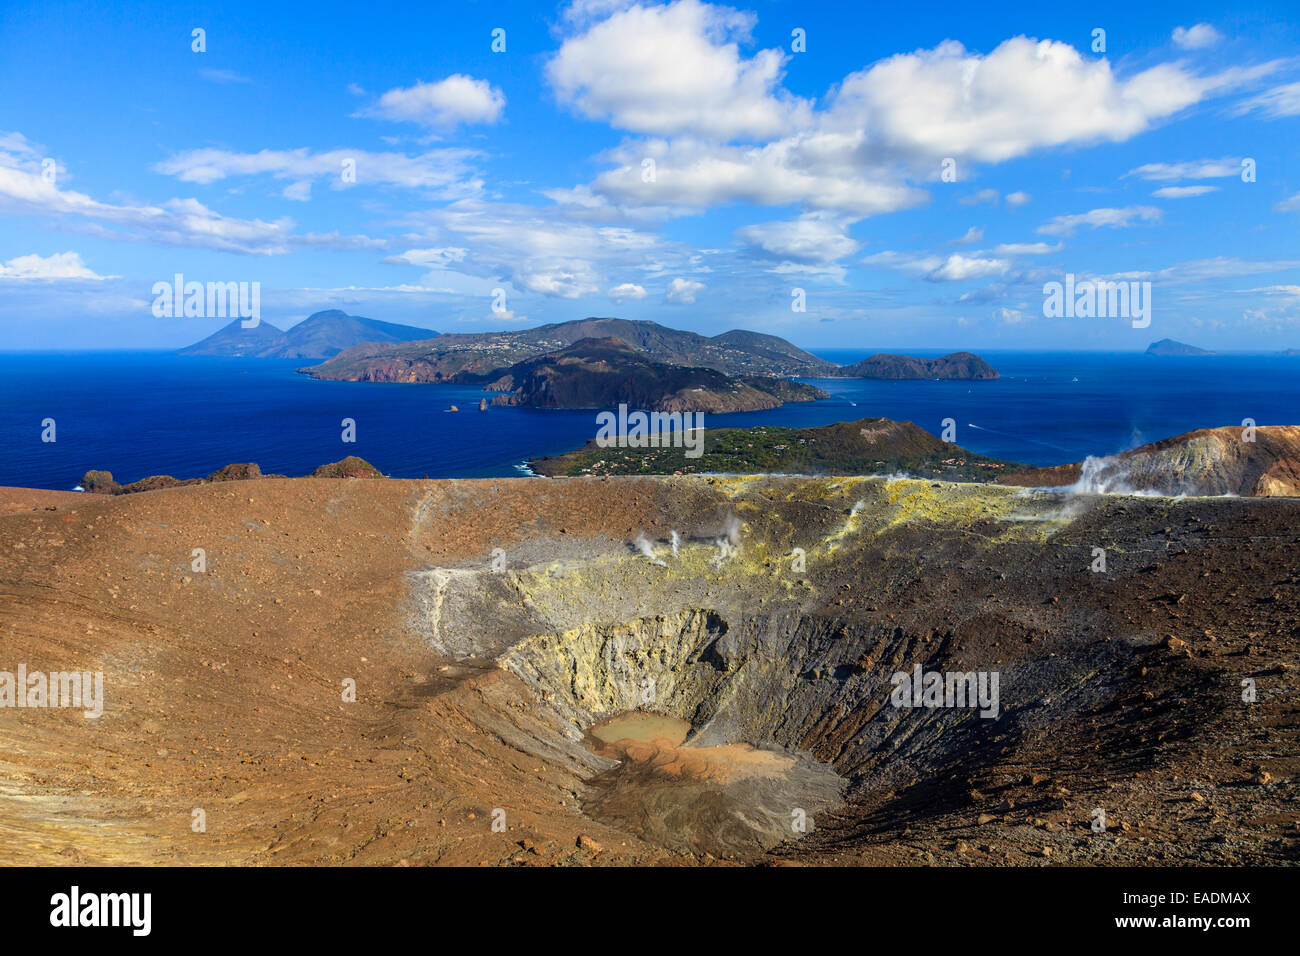 The active volcano in Vulcano Island Stock Photo